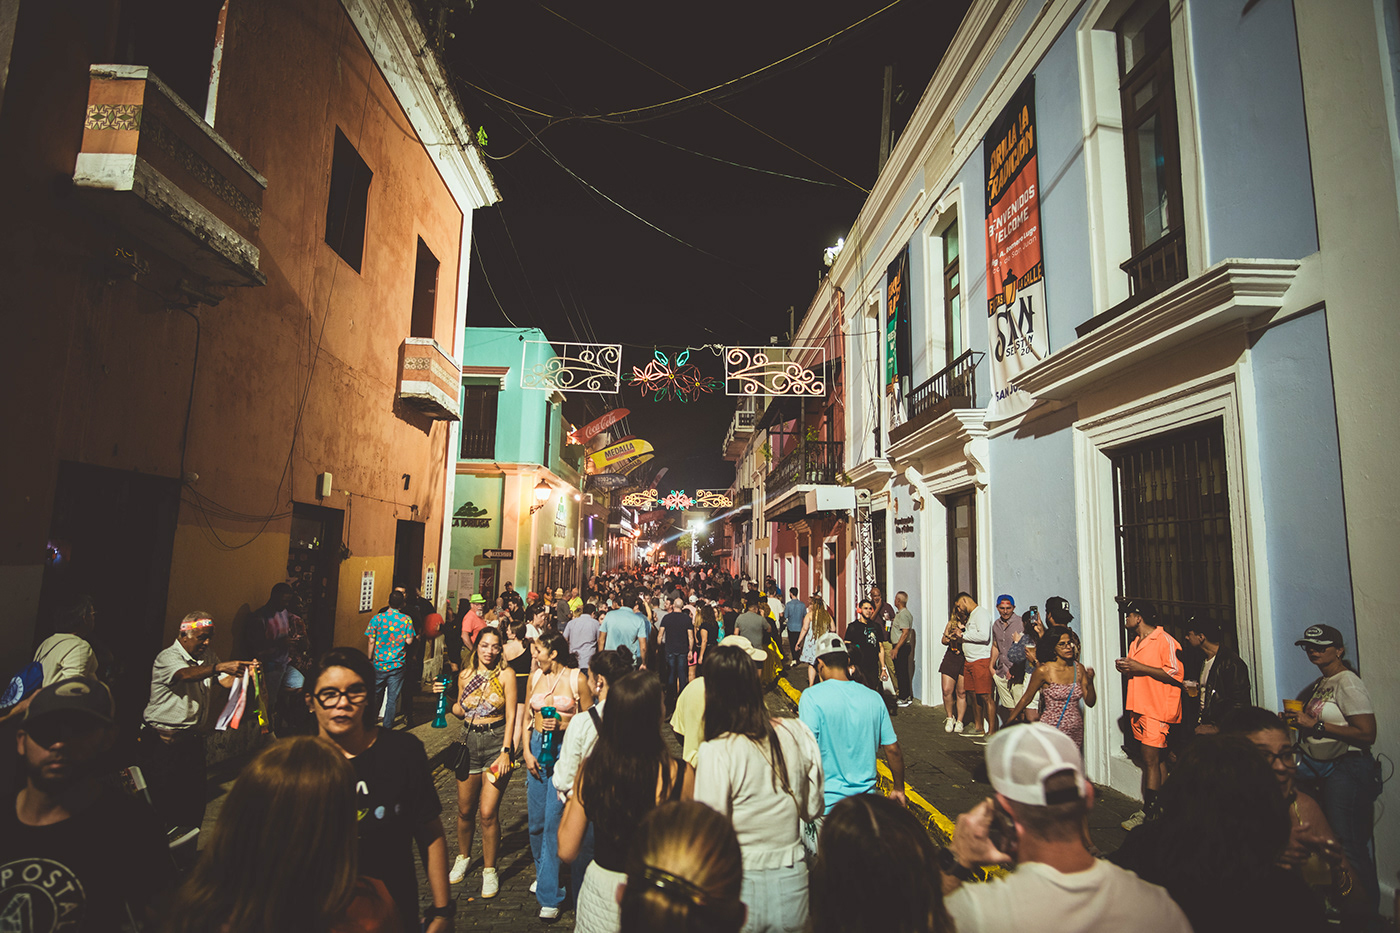 festival puerto rico Photography  street photography celebration